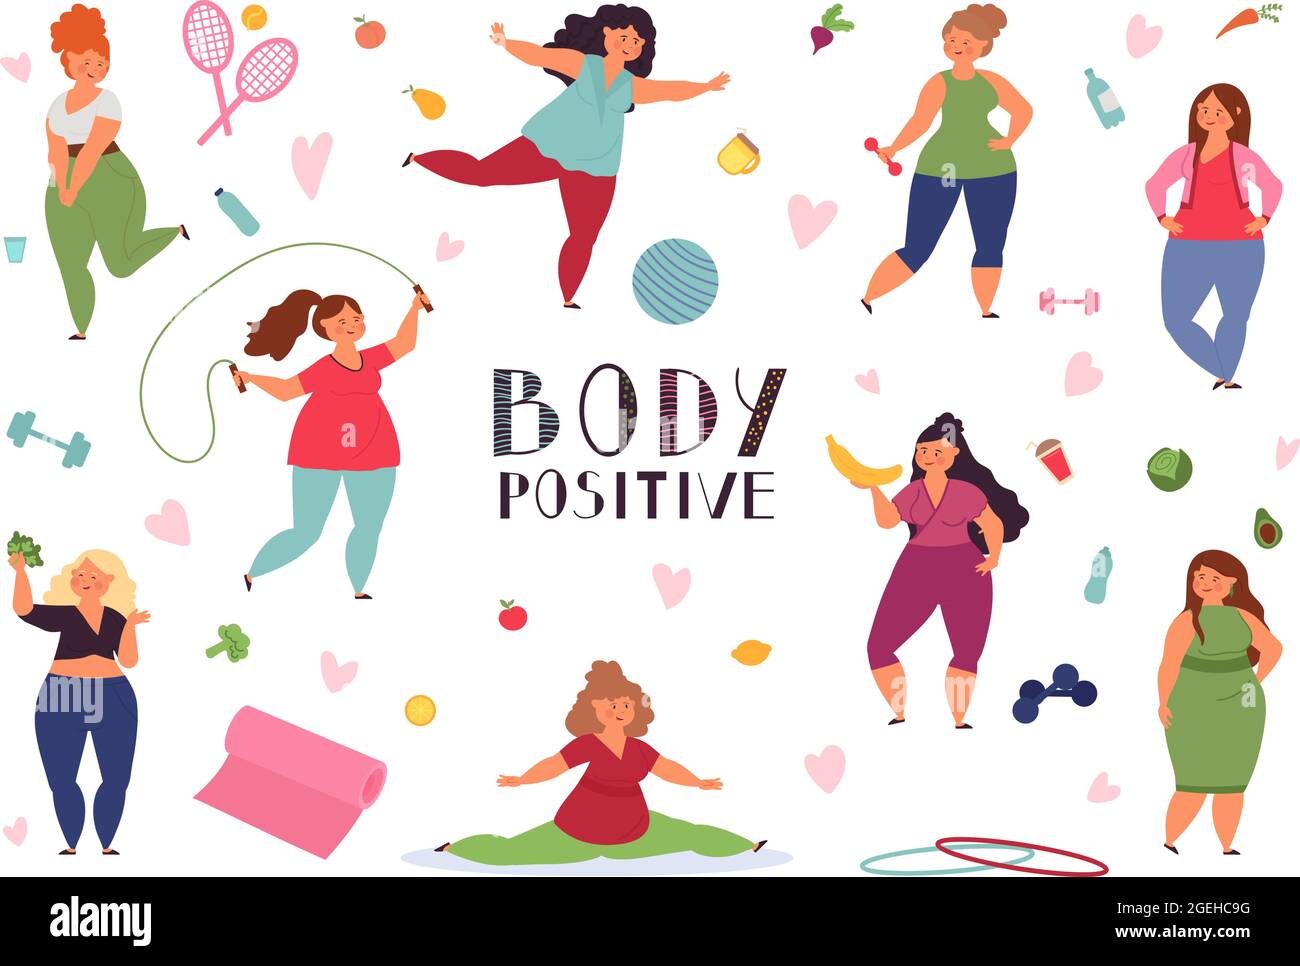 Cartoon characters that teach us body positivity